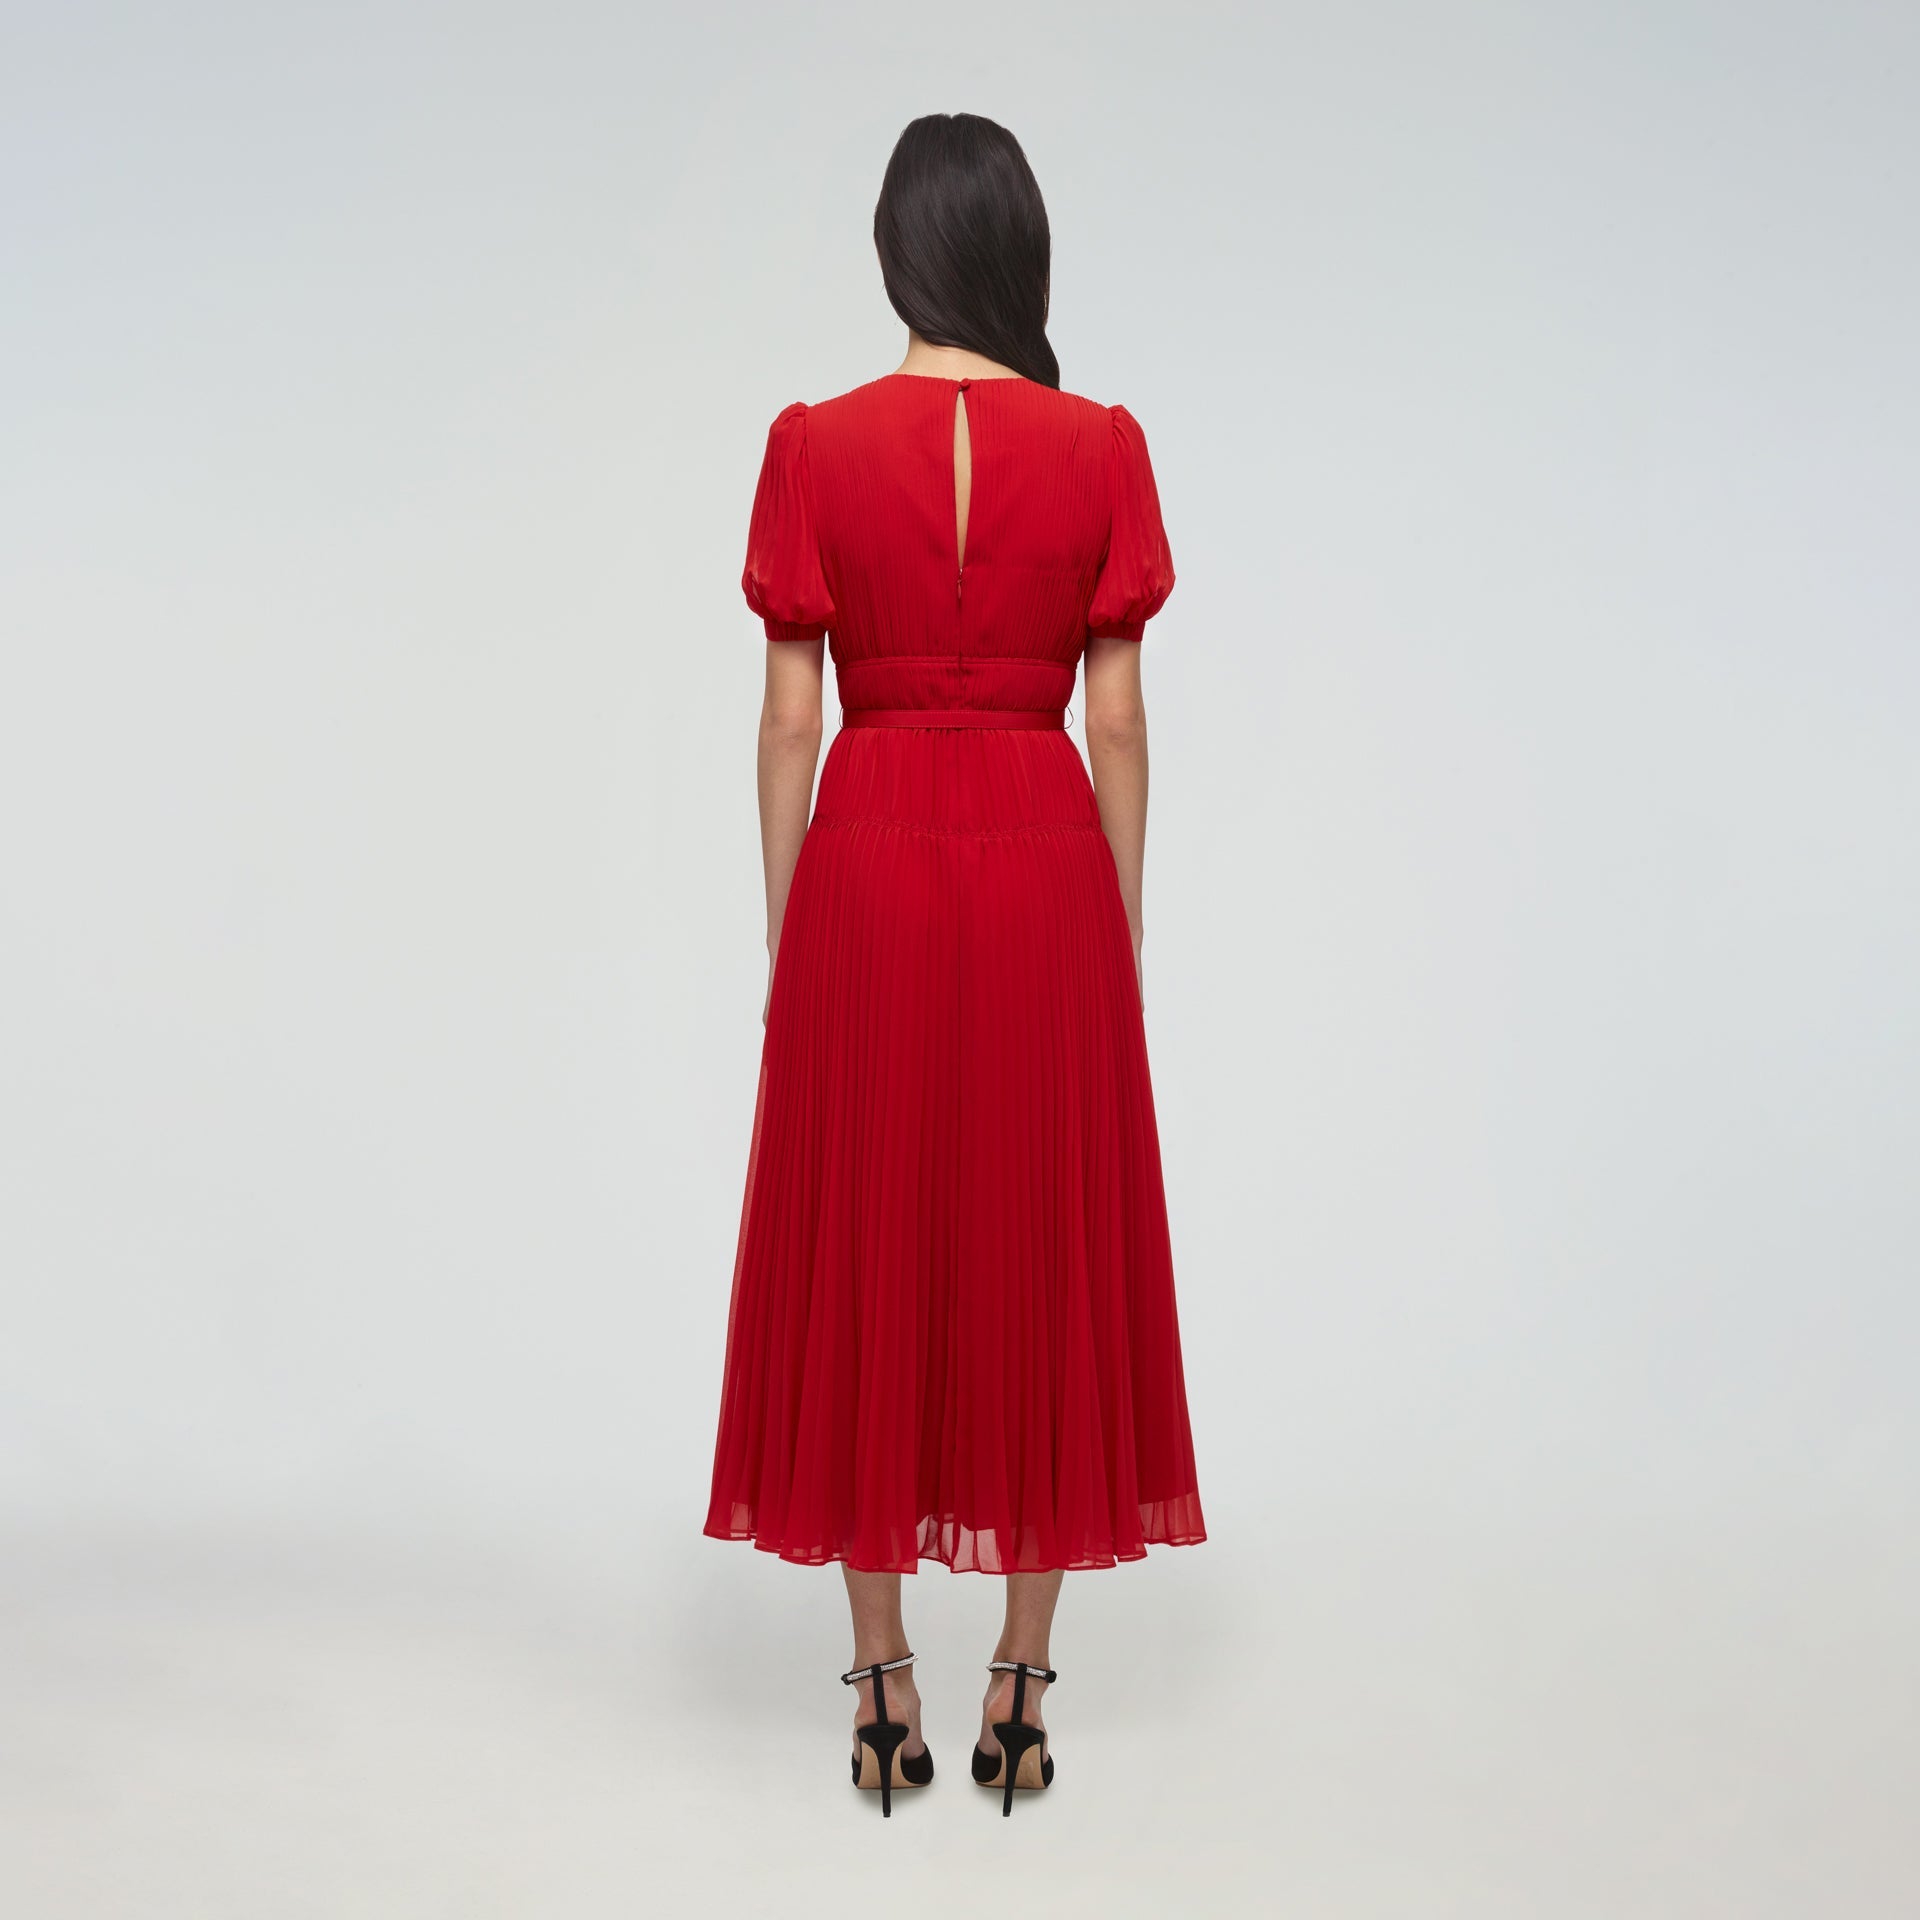 Red Midi Dresses | Red Midi Sundresses & Gowns | ASOS